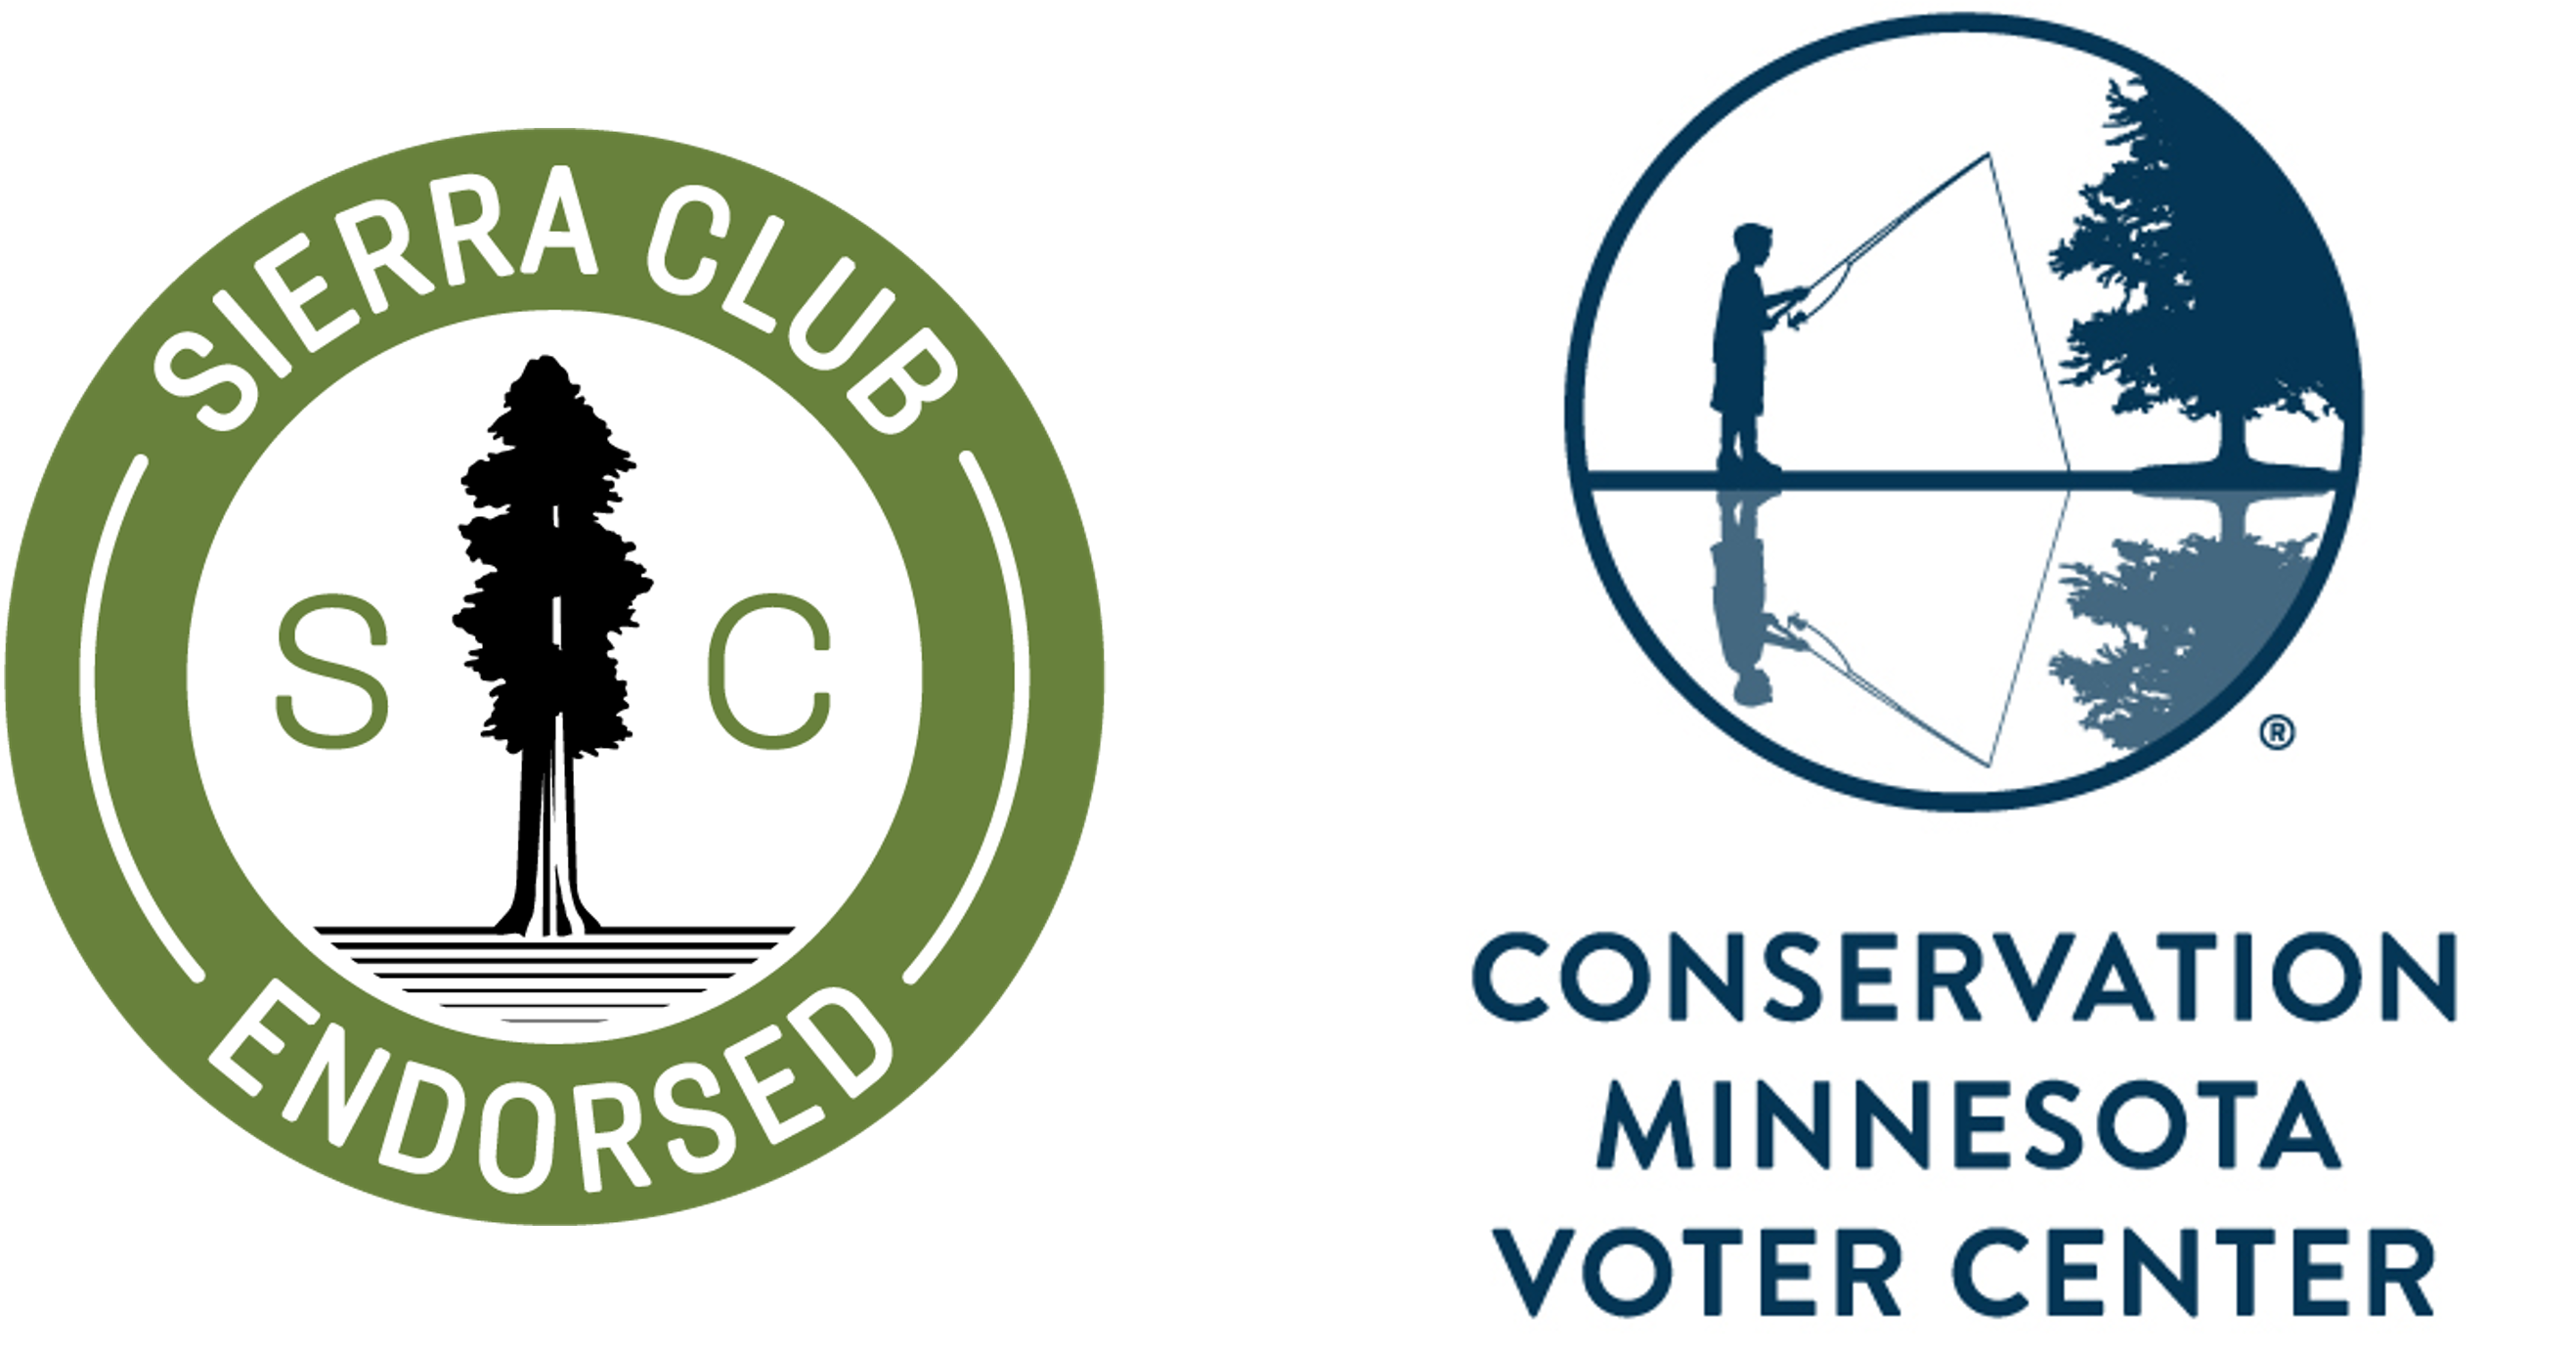 Sierra Club and Conservation Minnesota Voter Center logos